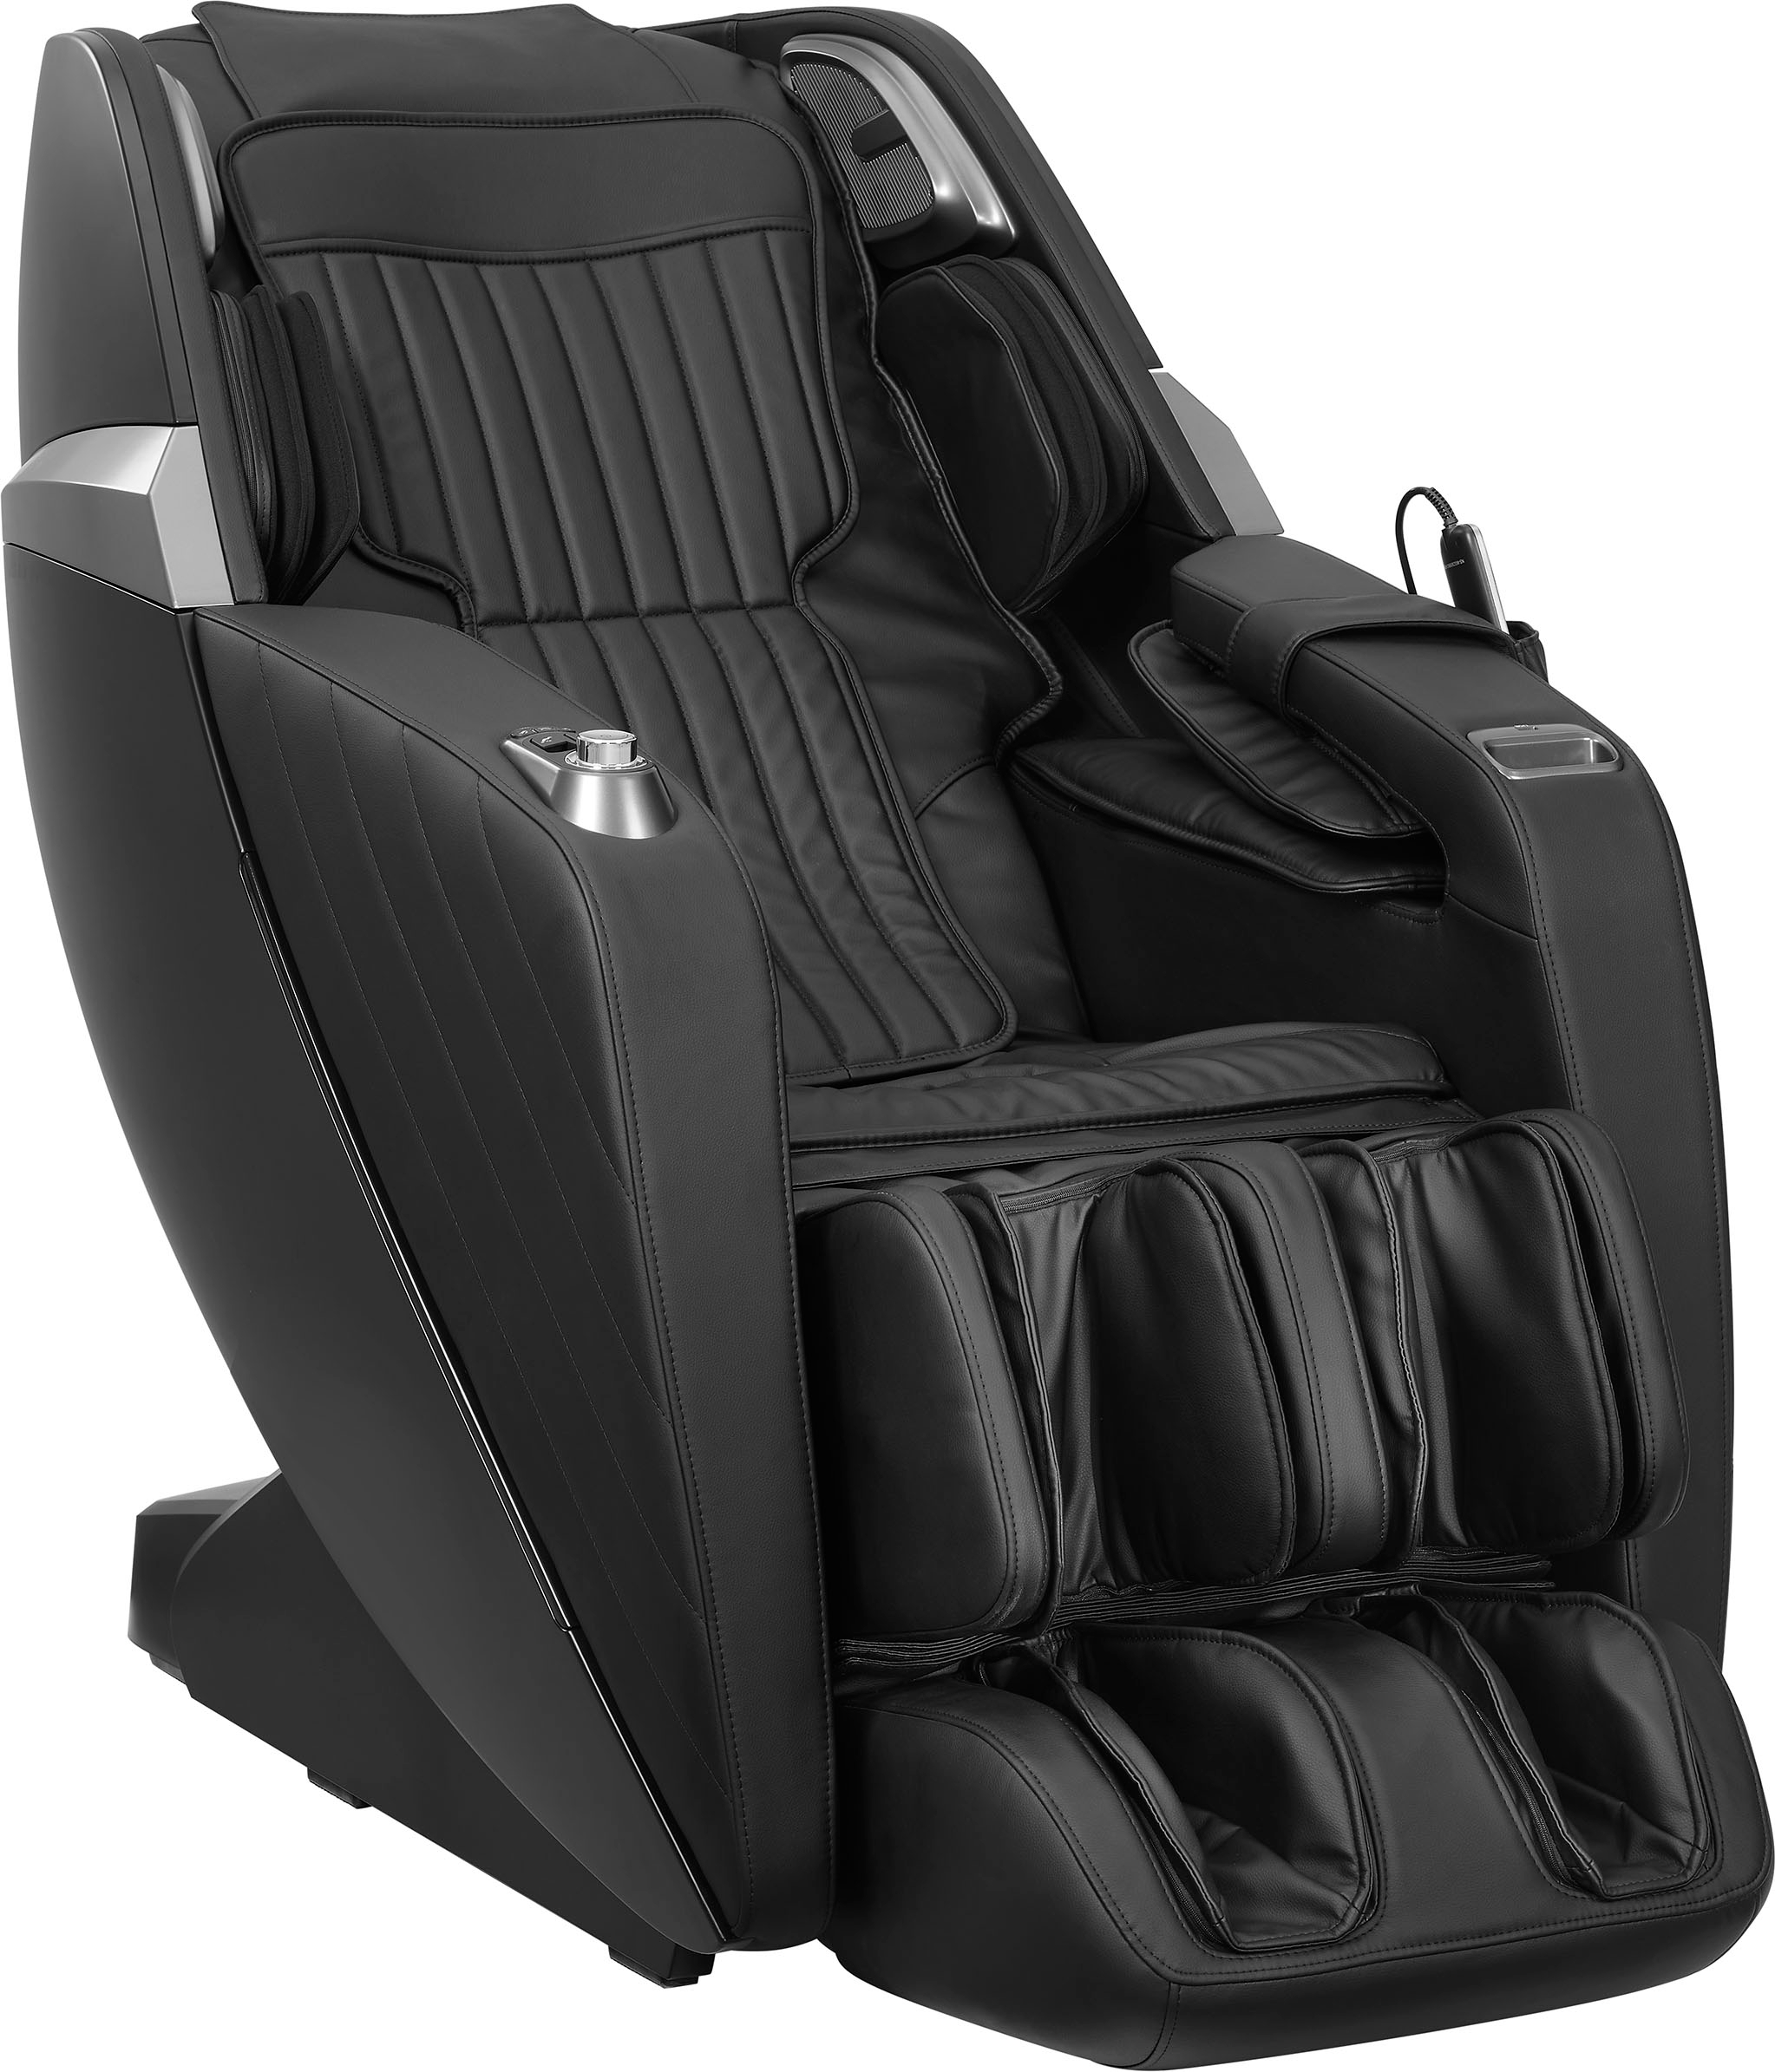 Insignia™ 3D Zero Gravity Full Body Massage Chair Black NS-MGC600BK2 - Best Buy $1599